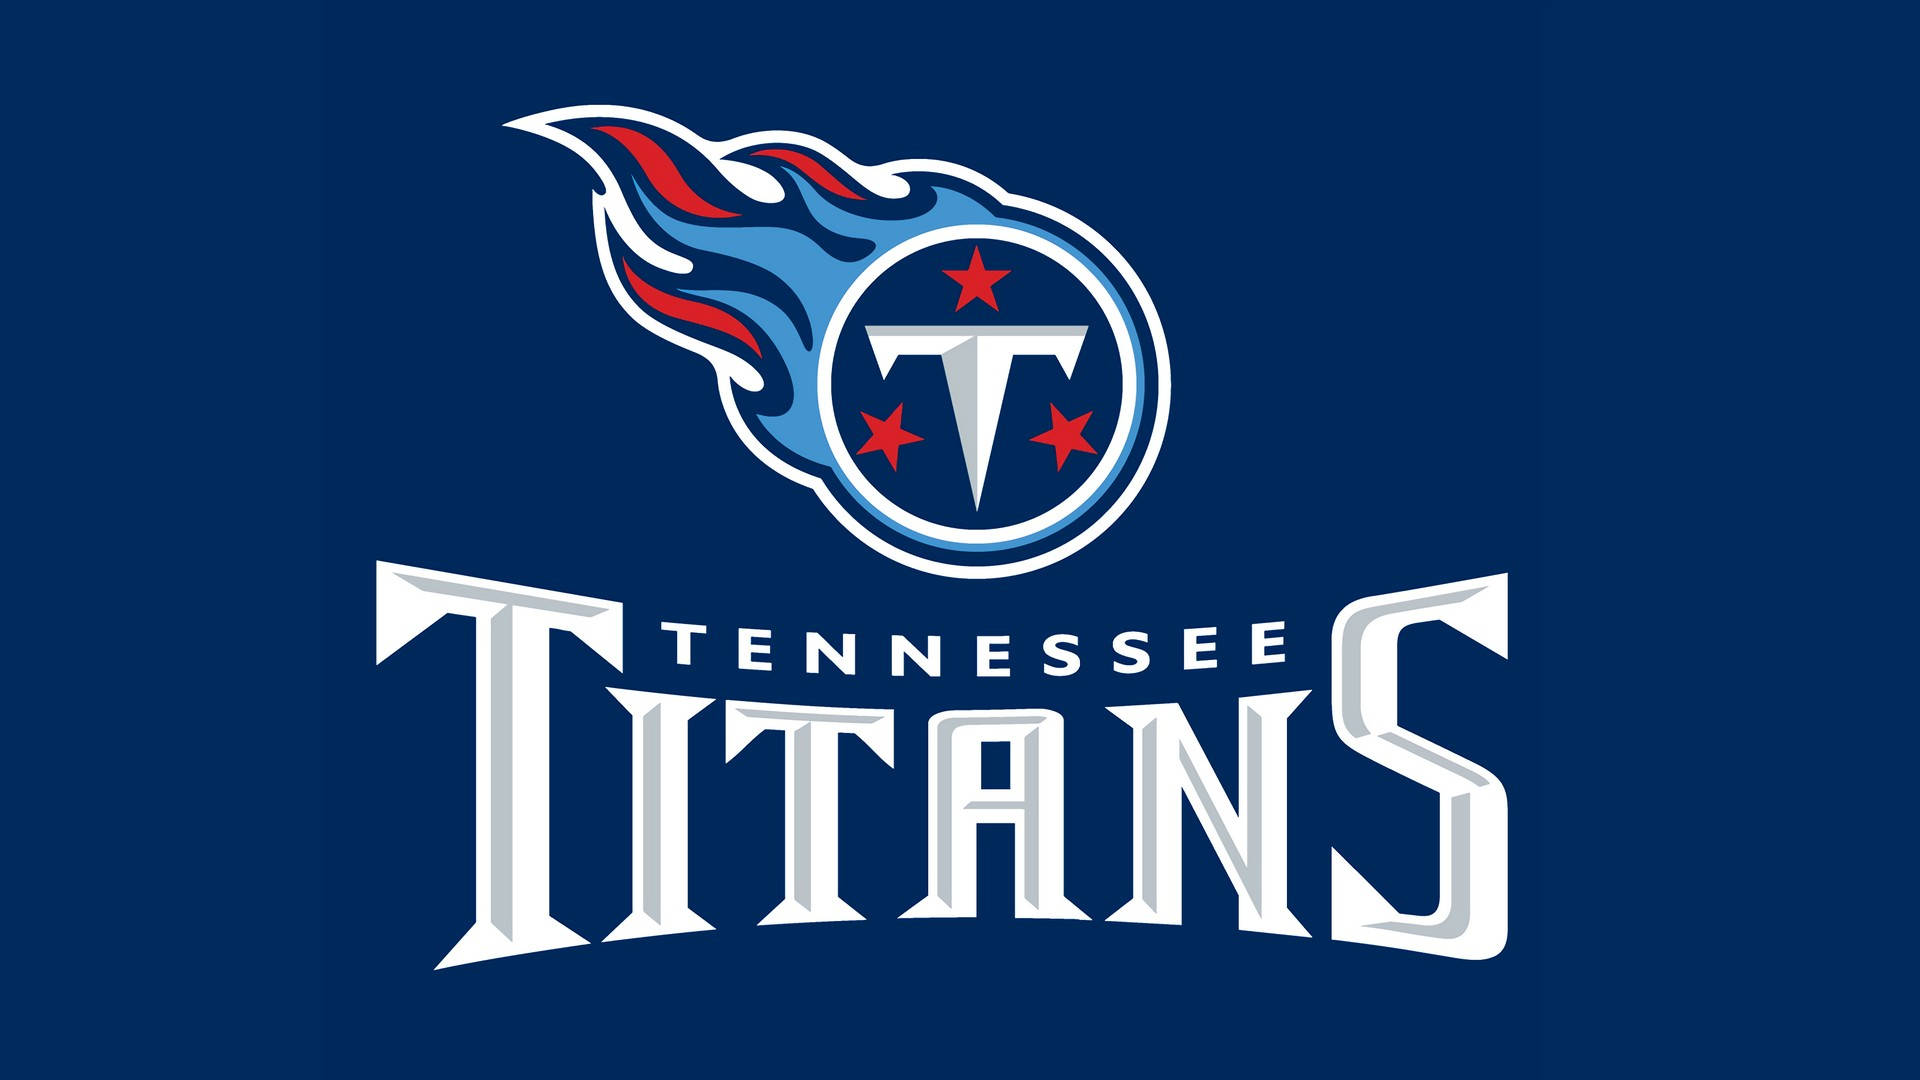 Tennessee Titans American Football Team Wallpaper